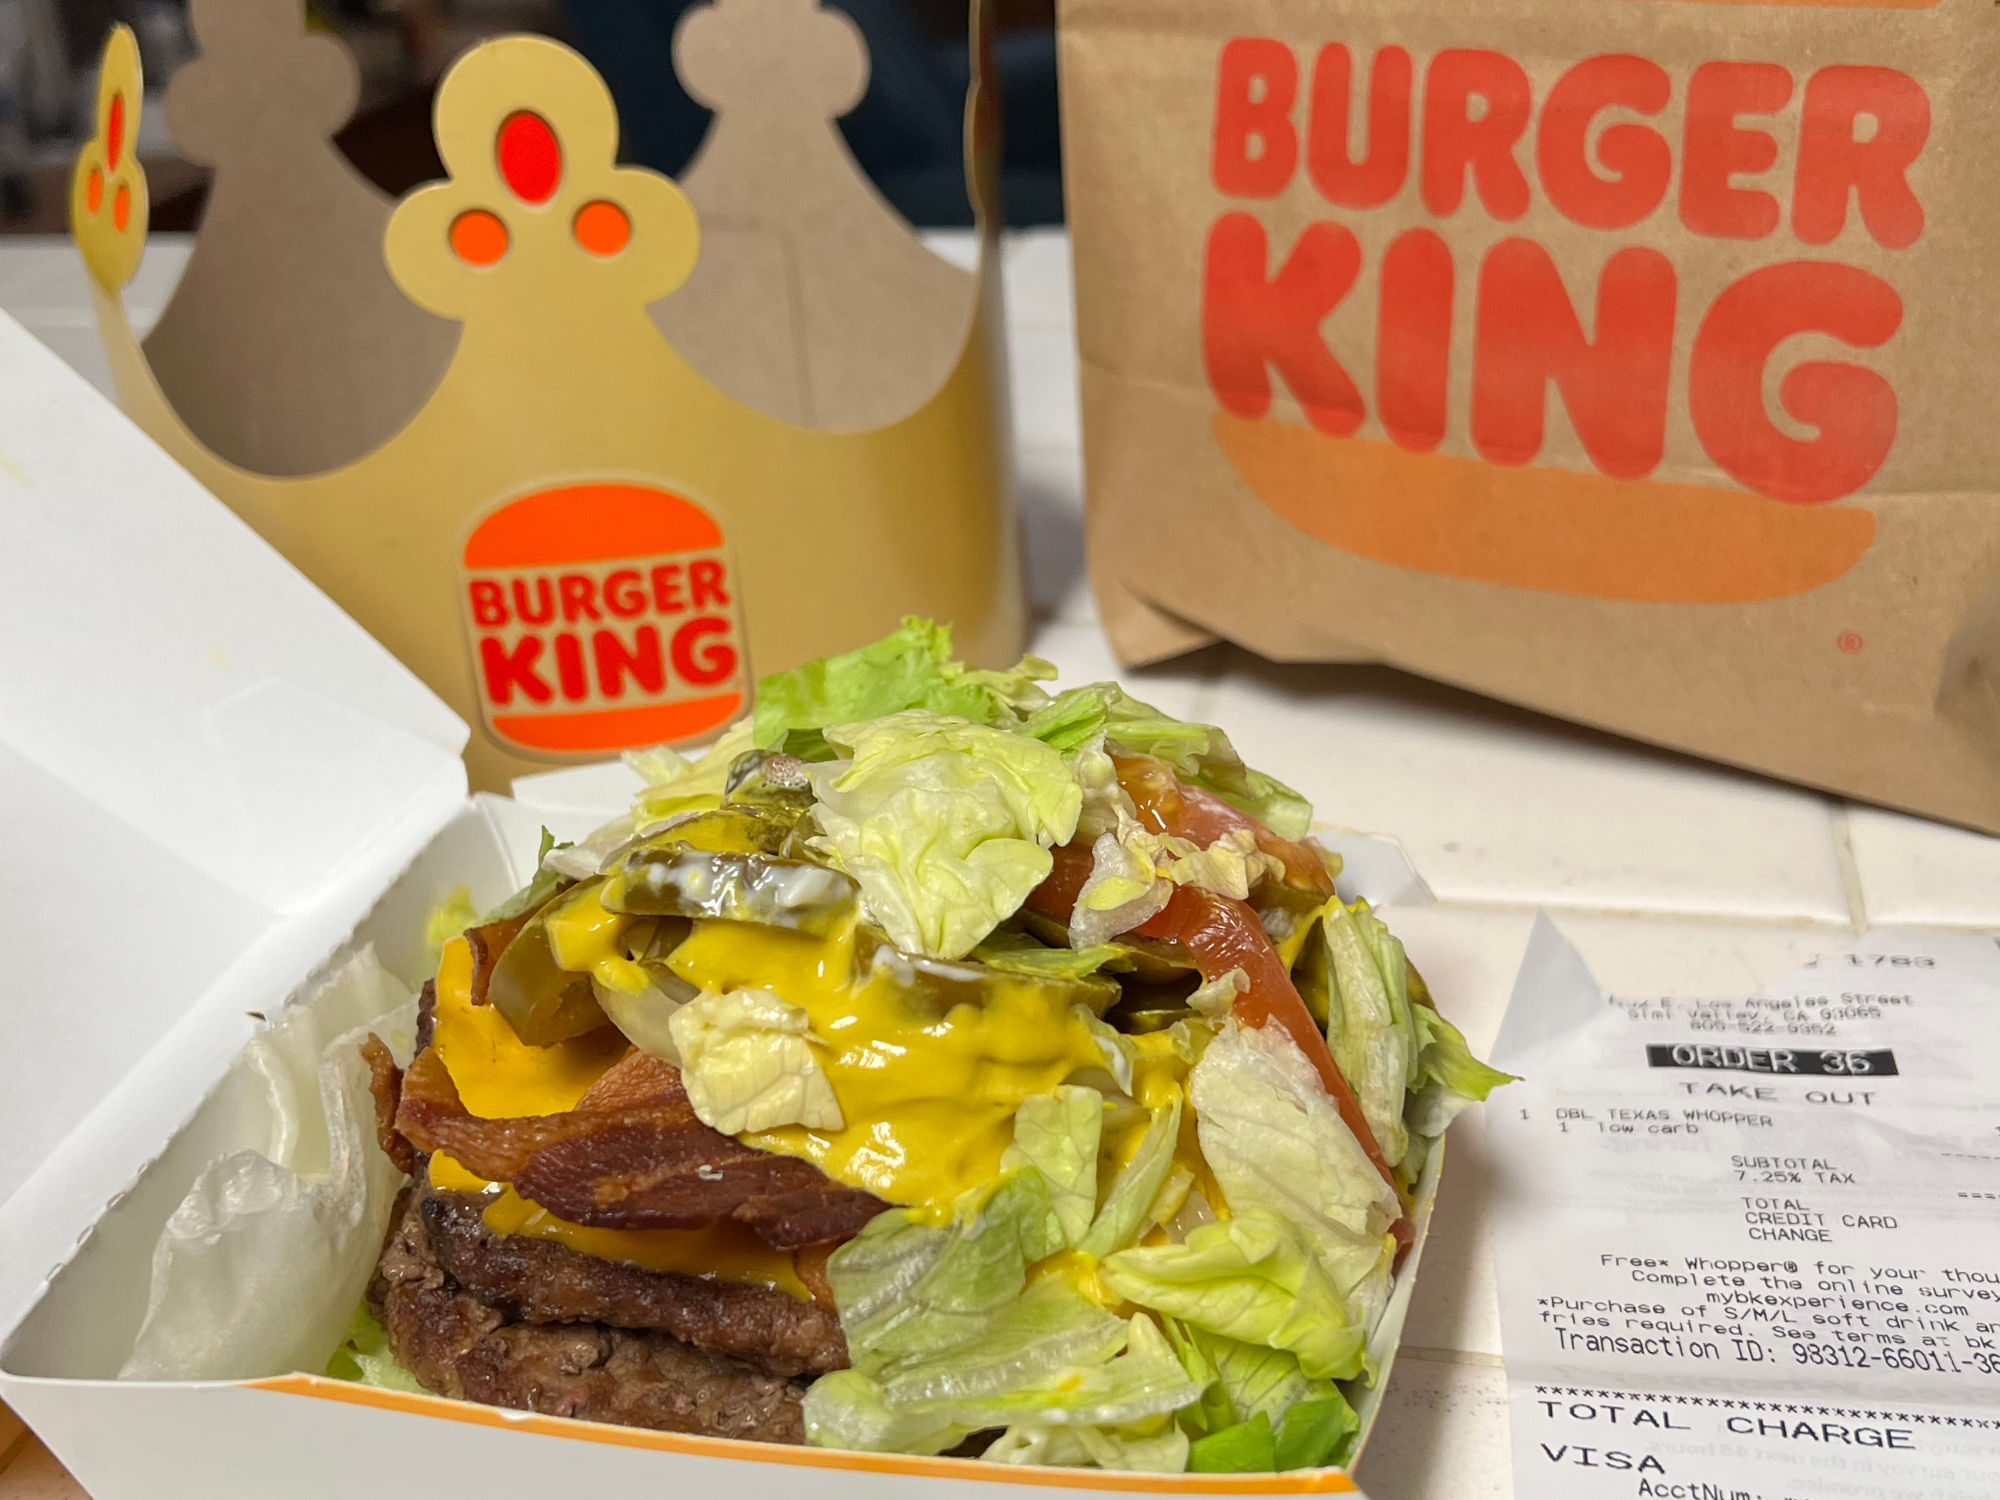 Burger King Keto Double Texas Whopper